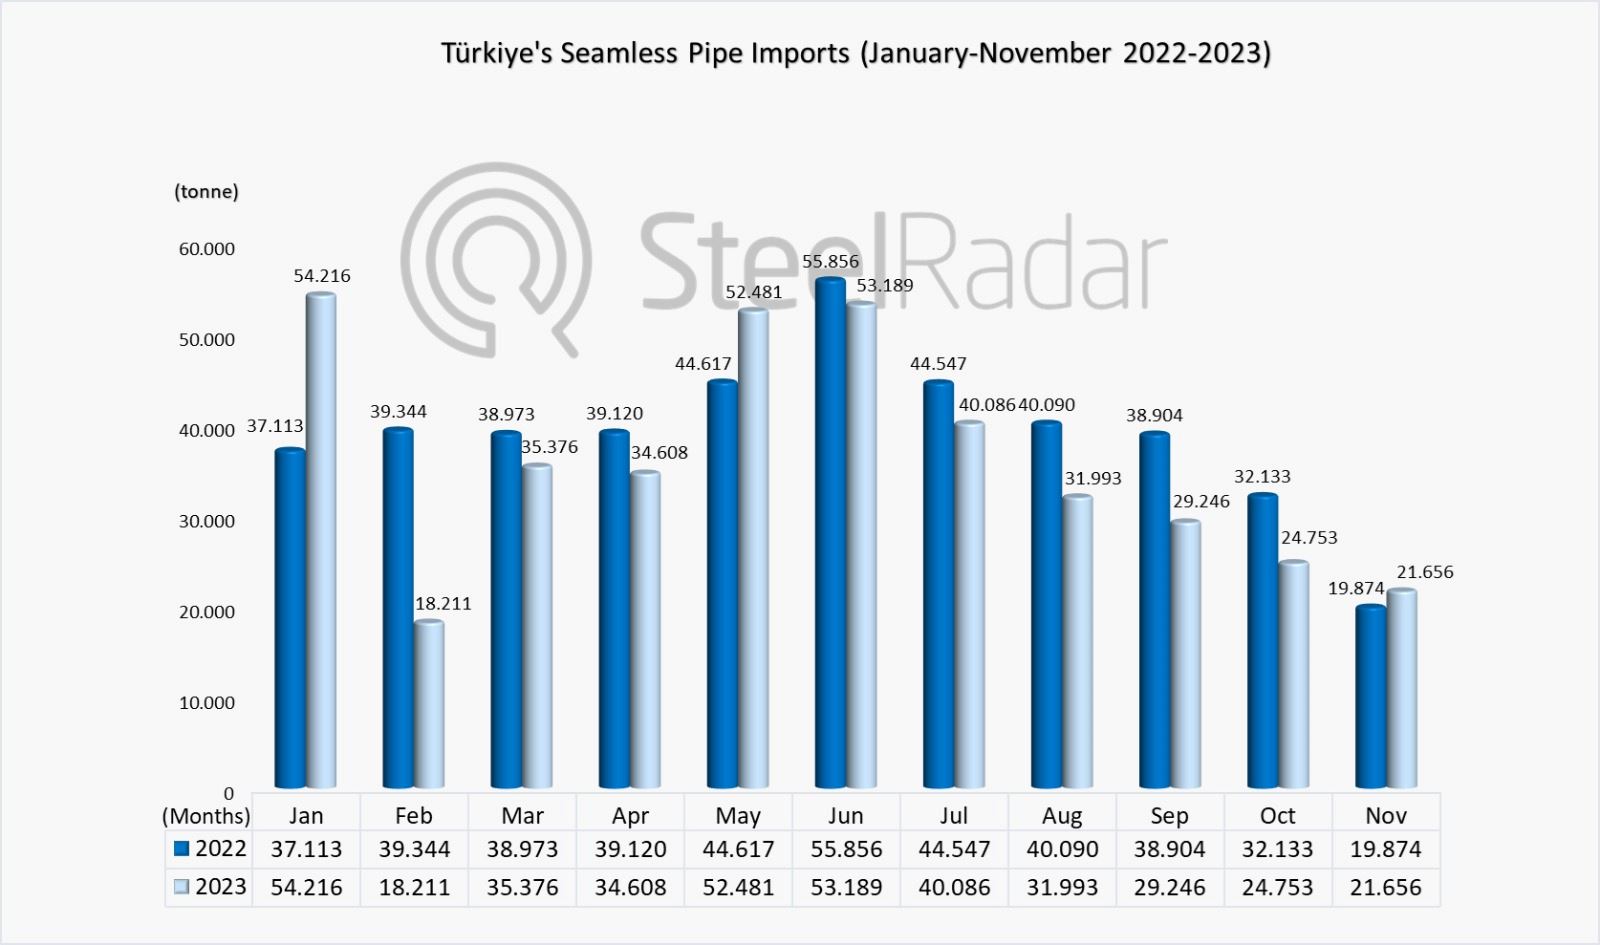 Türkiye's seamless steel pipe imports decreased by 8.07% in January-November period